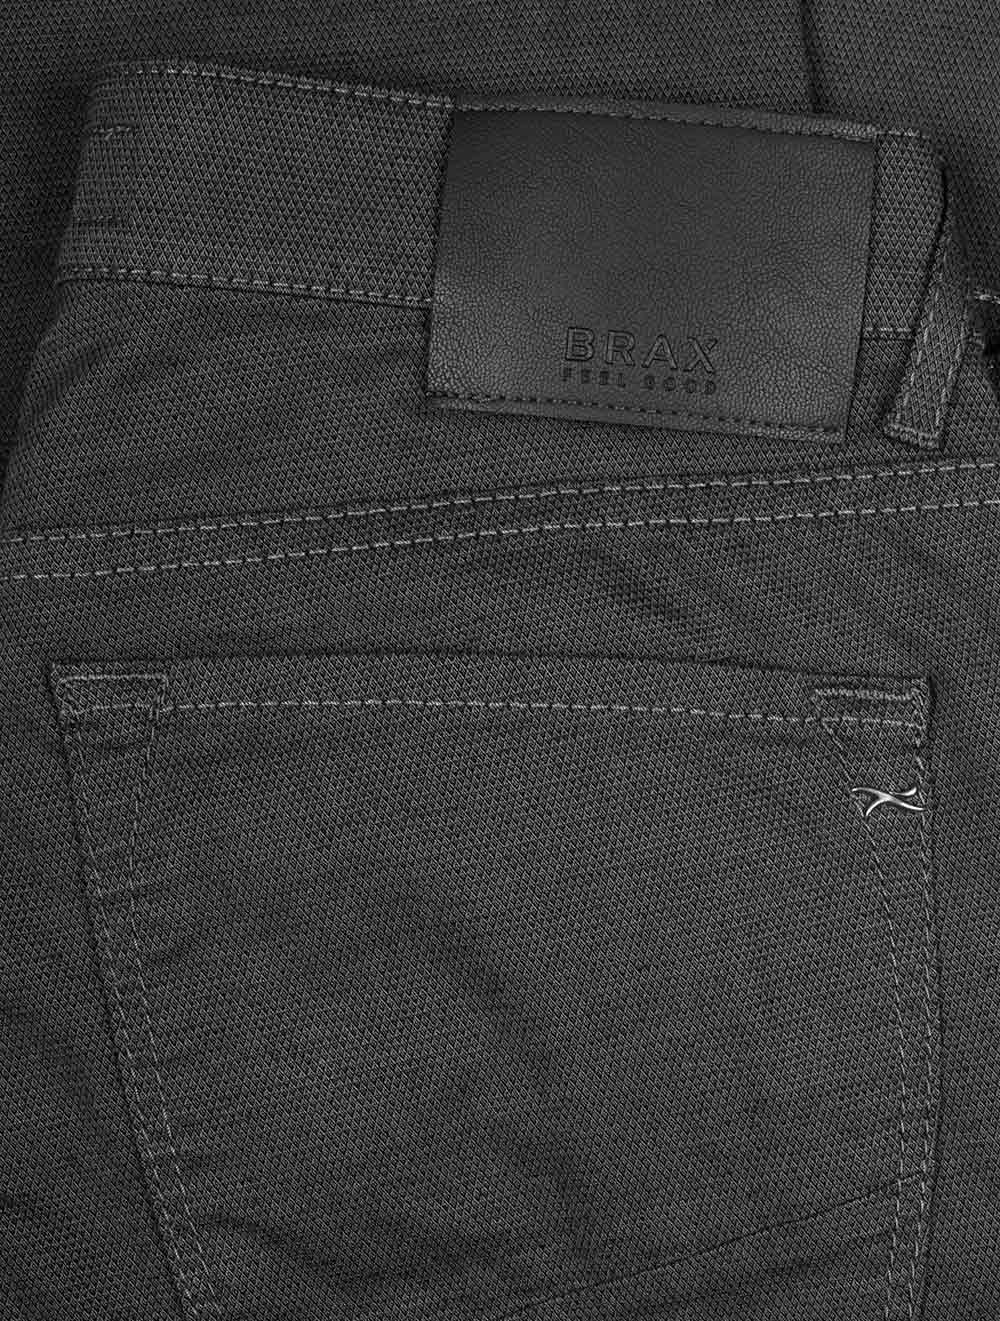 Chuck 5 Pocket Trousers-Grey